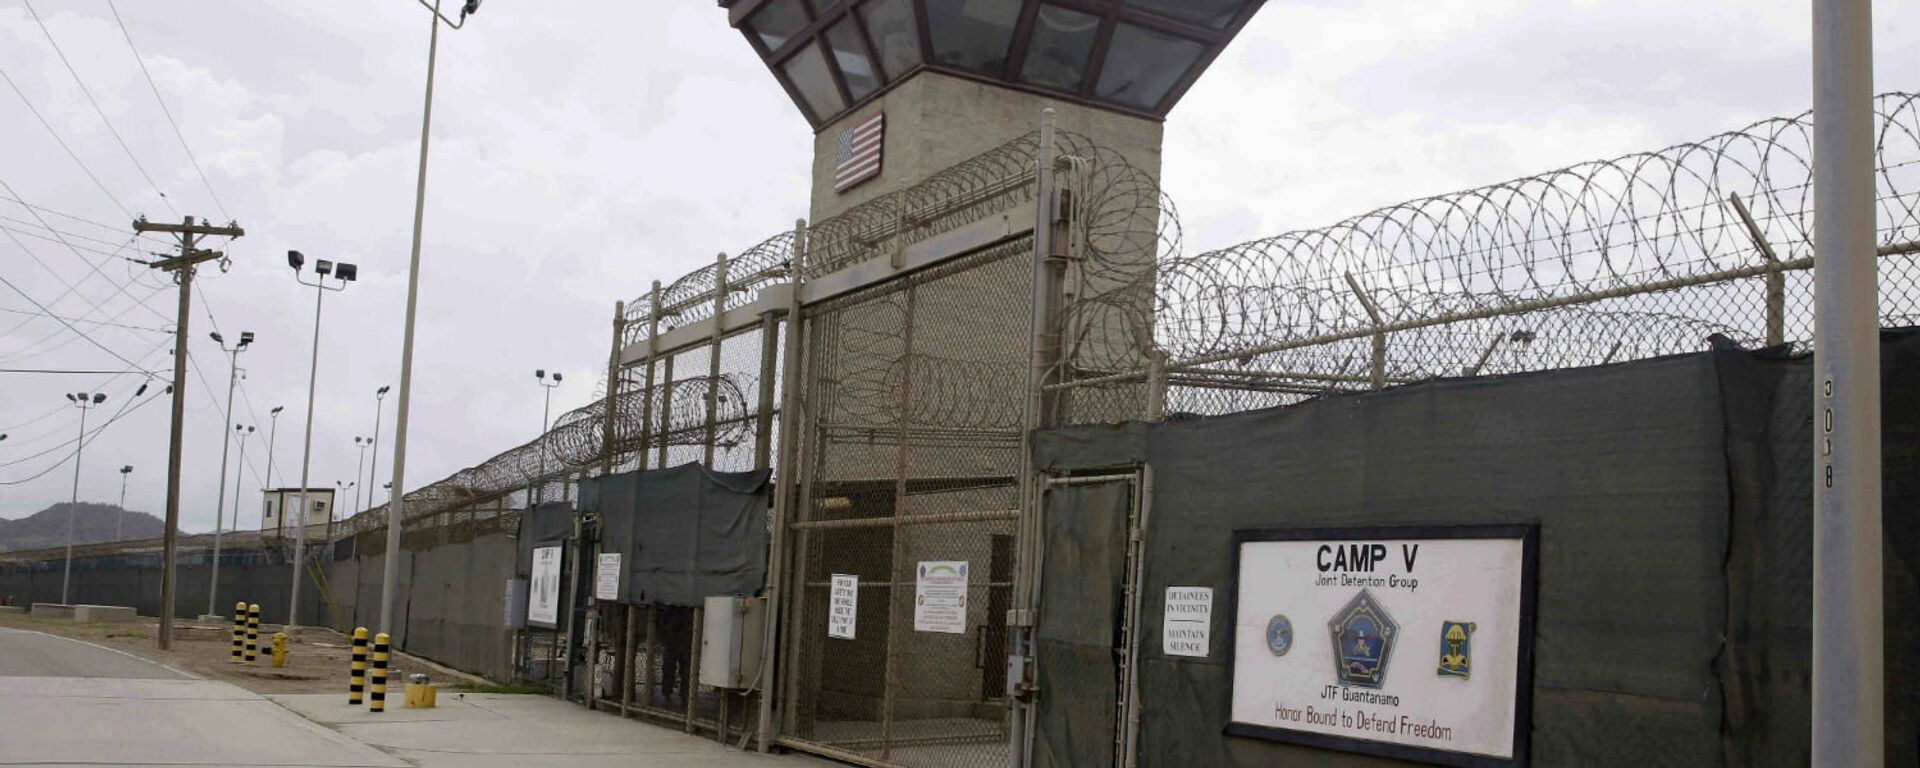 Prisão de Guantánamo. - Sputnik Brasil, 1920, 29.10.2021